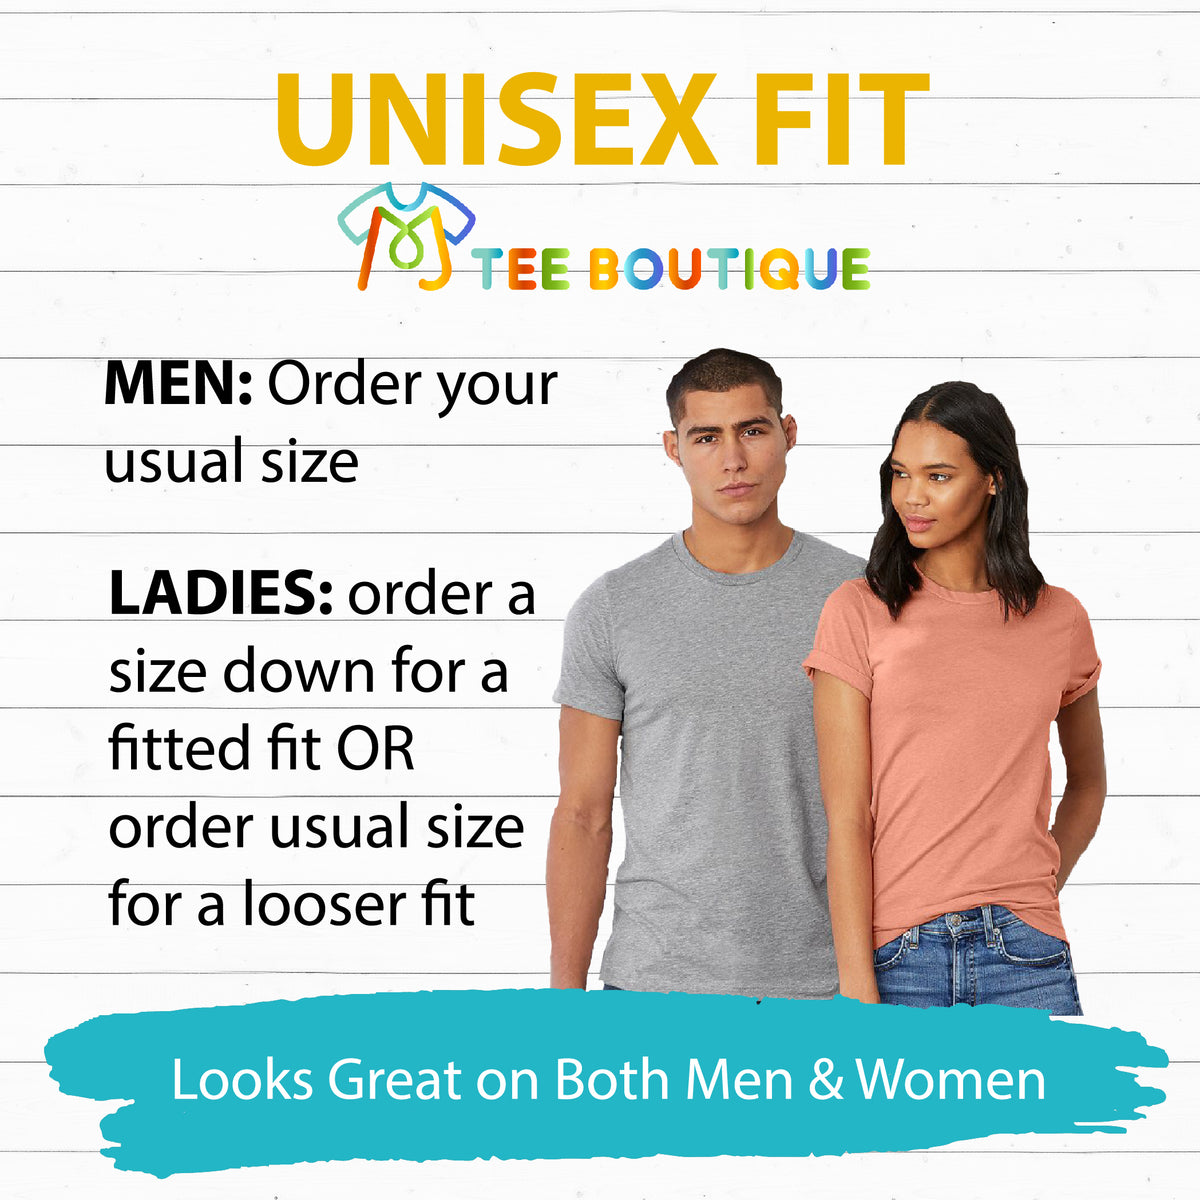 Pink Freud School Psychologist Counselor Shirt | Psychology Gift | Super Soft Tshirt | Unisex Jersey T-shirt